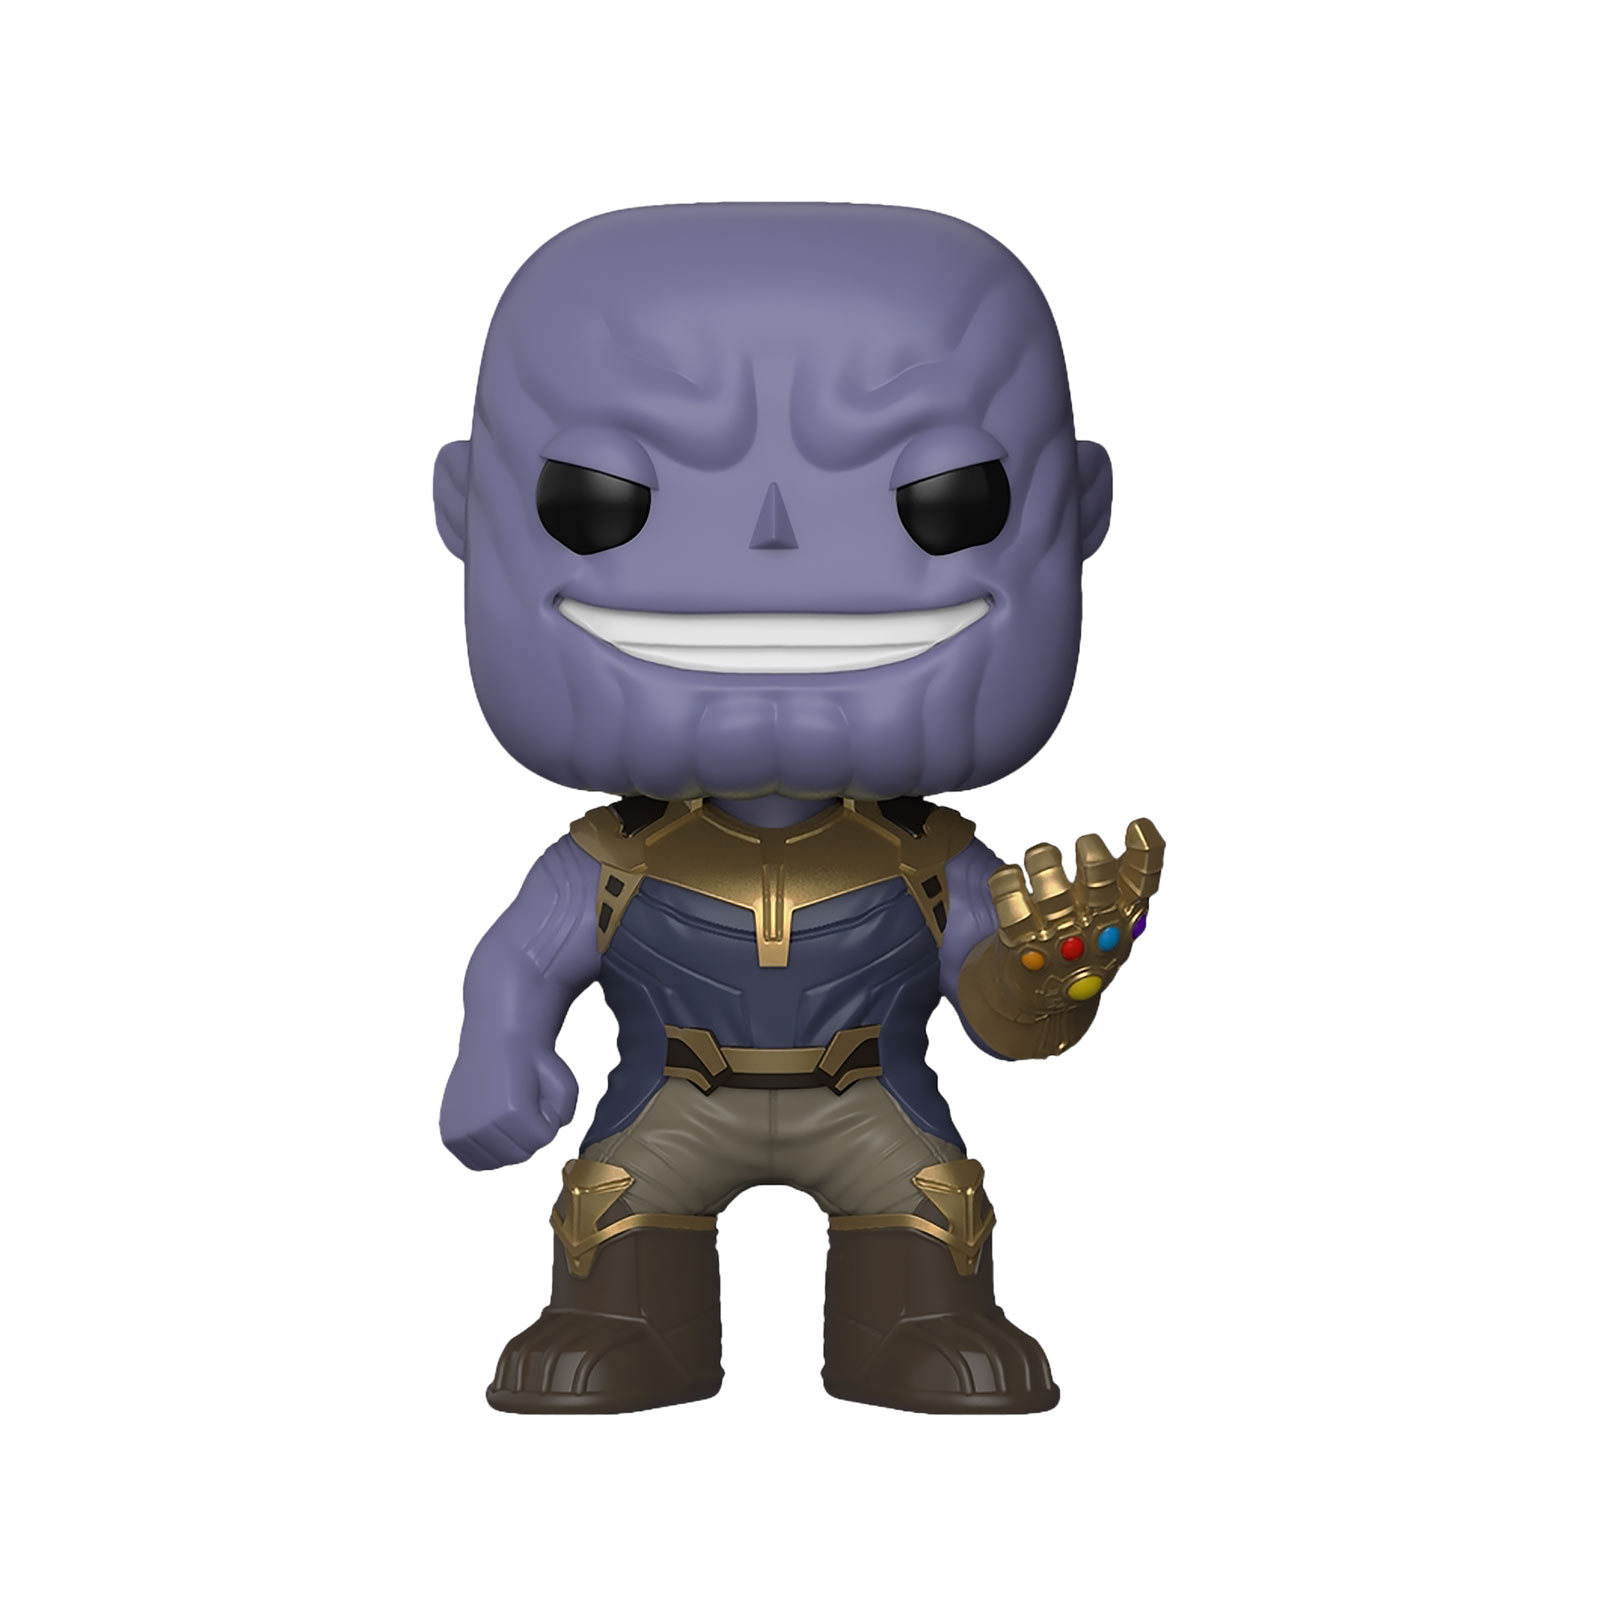 Avengers - Thanos Infinity War Funko Pop Bobblehead Figure